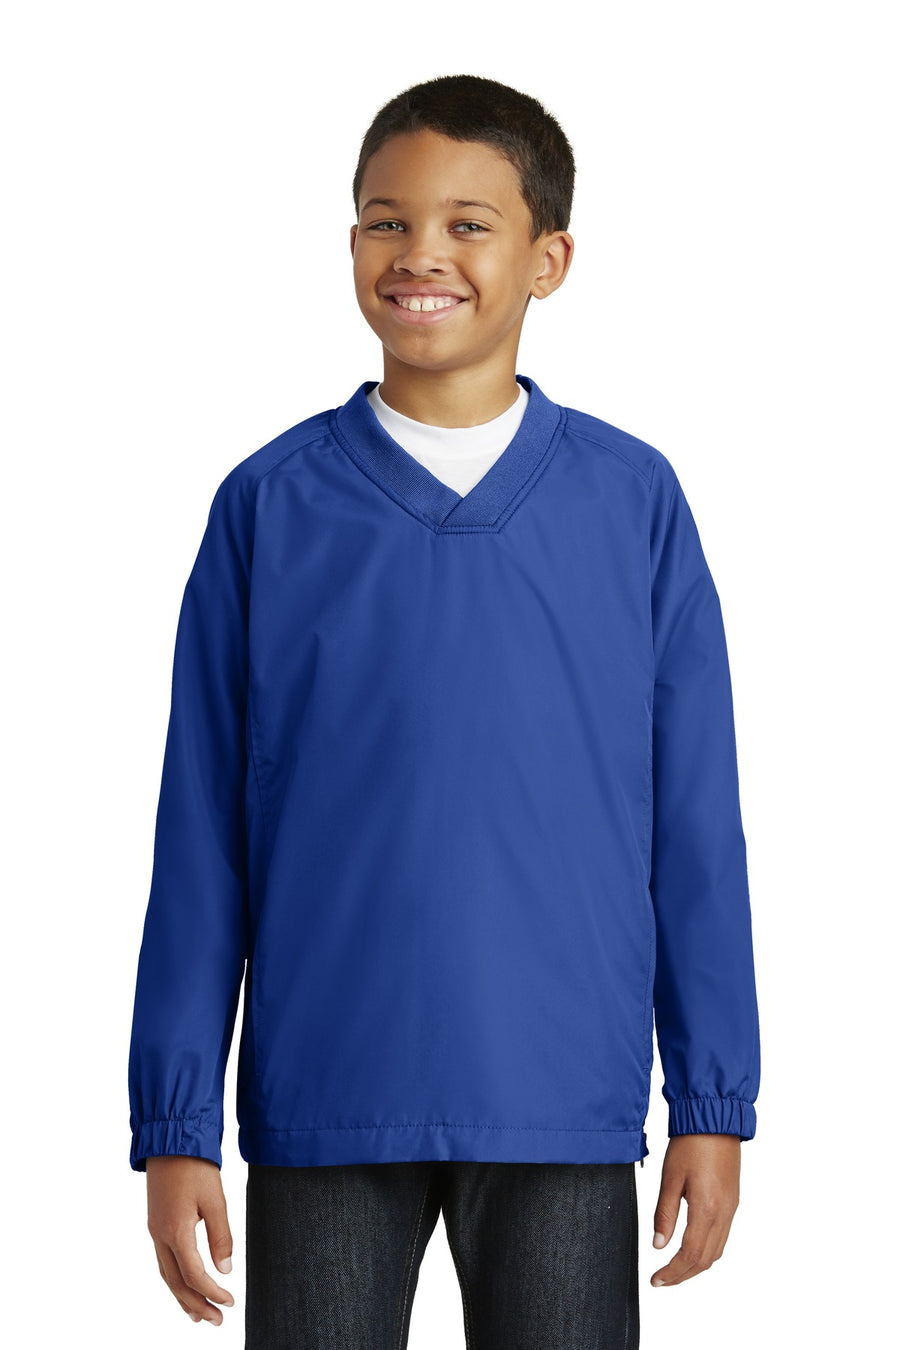 Sport-Tek Youth V-Neck Raglan Wind Shirt.